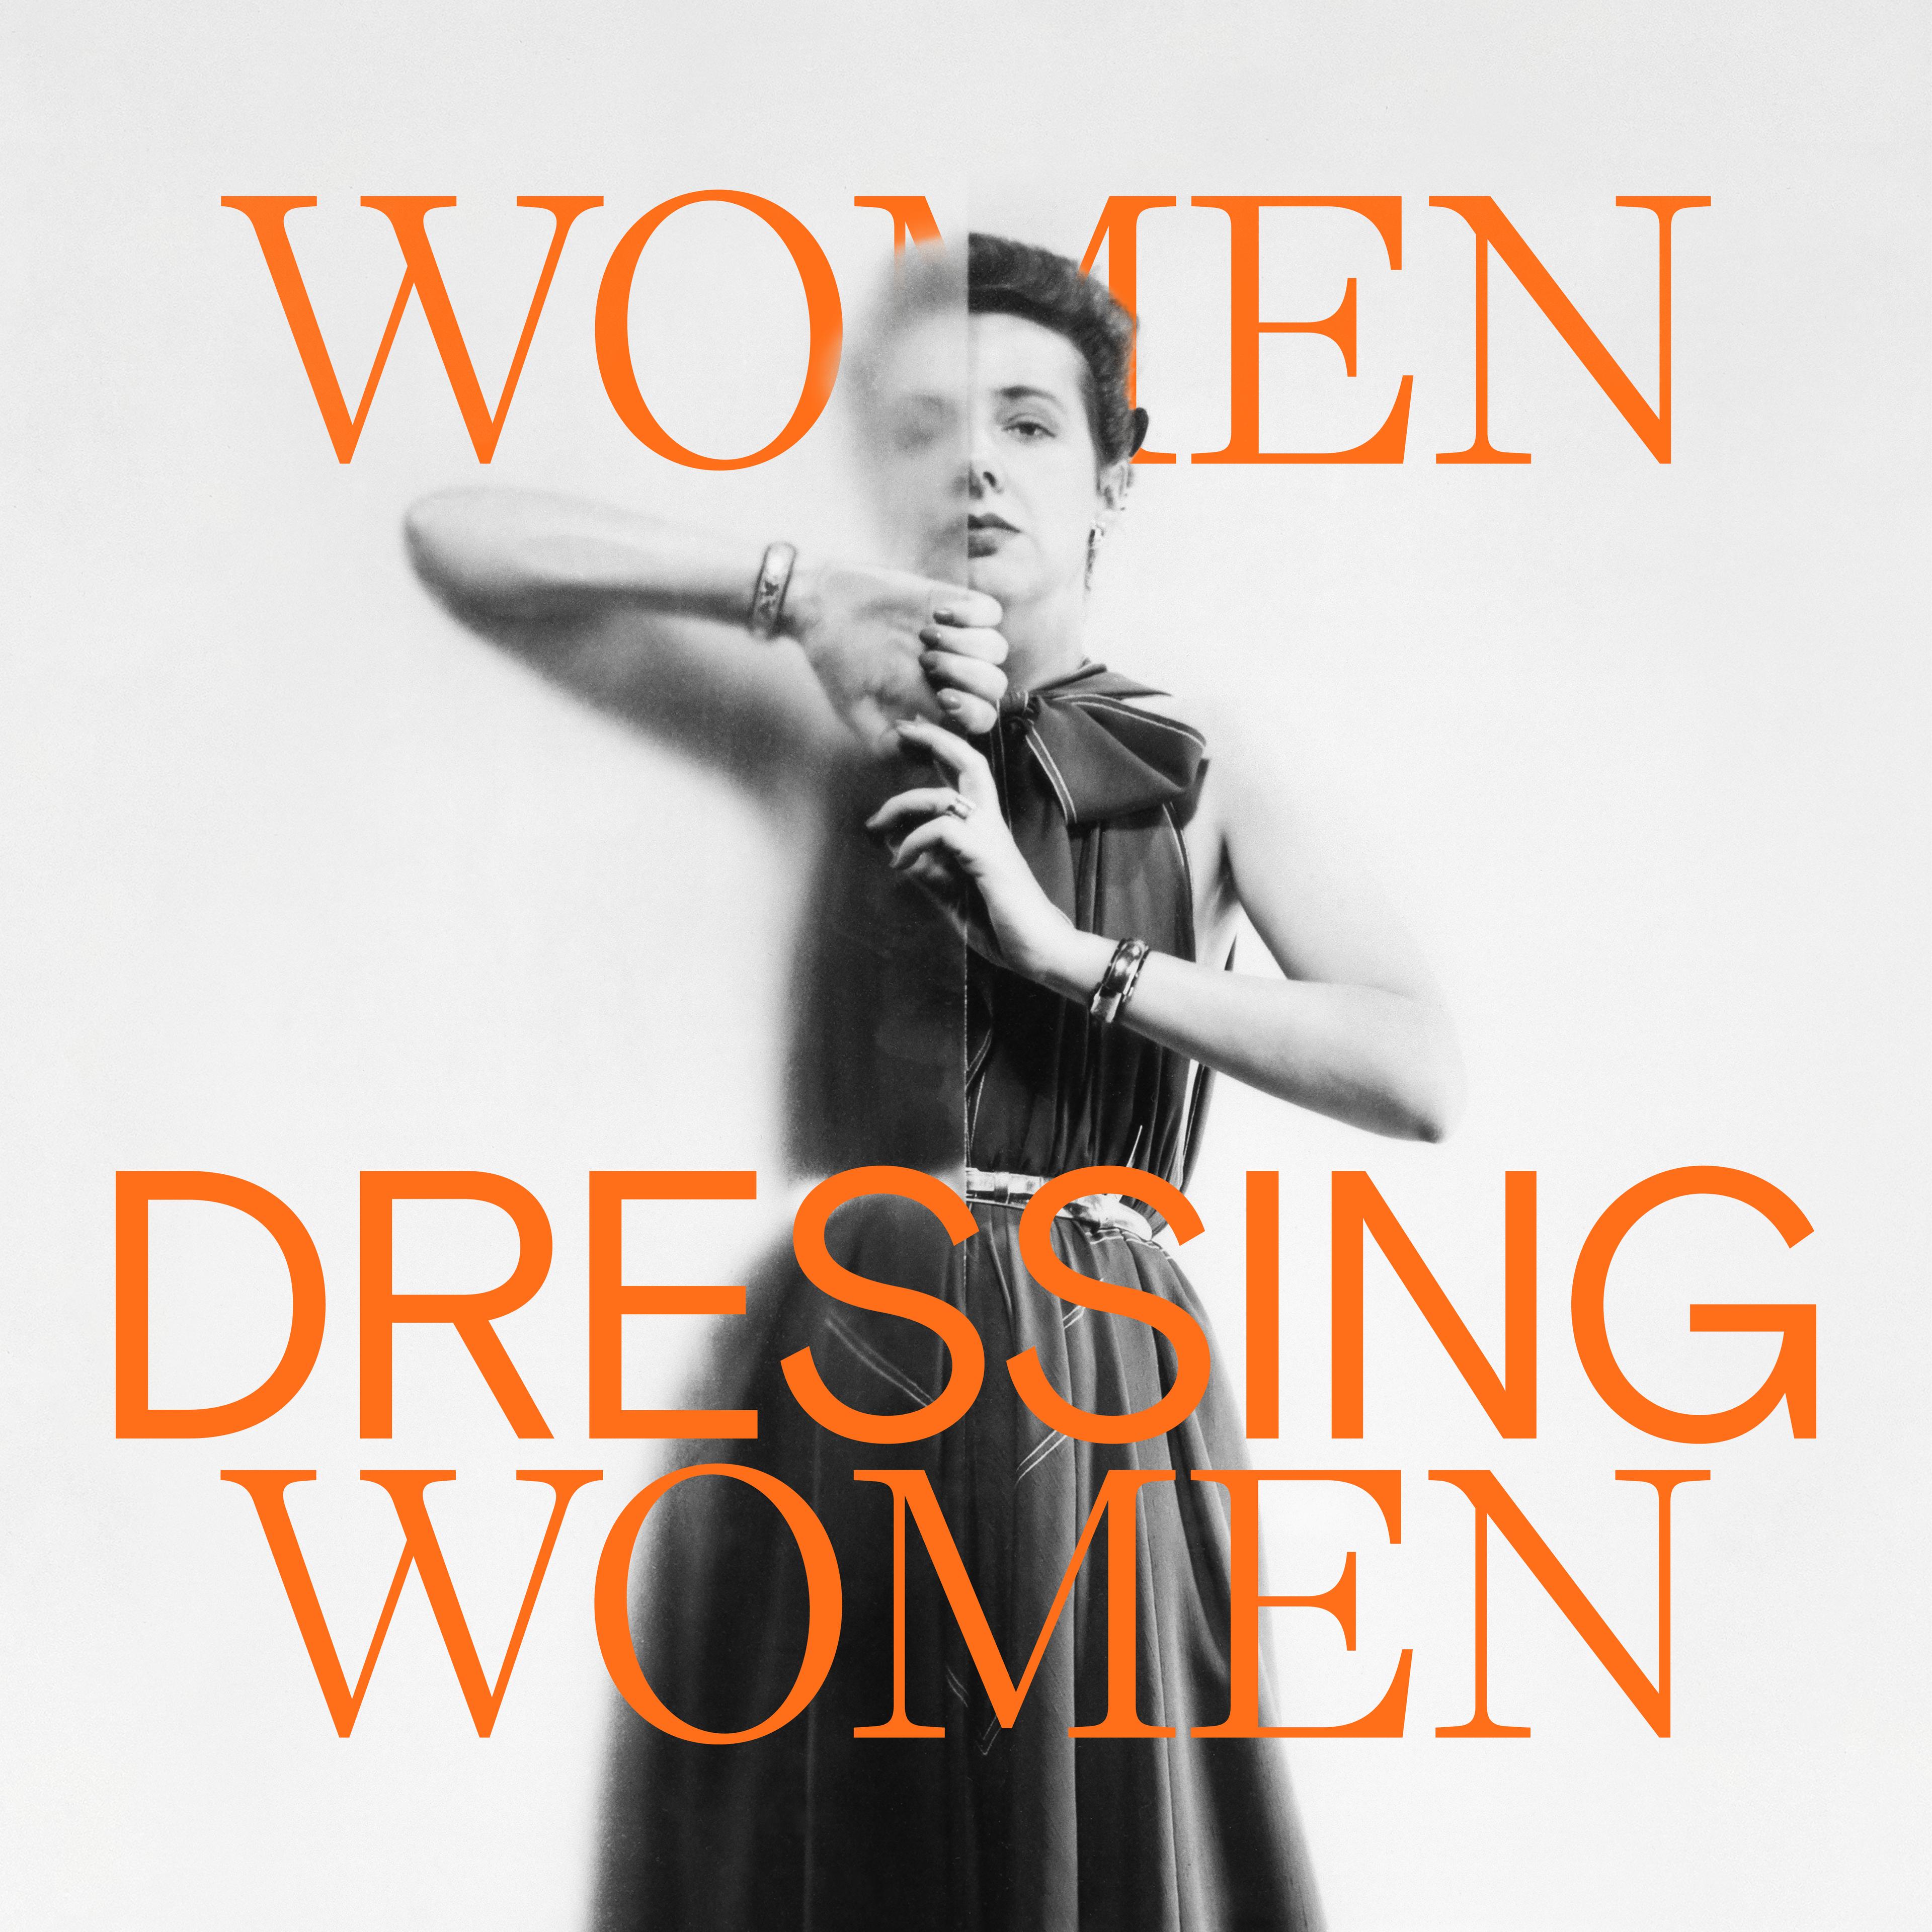 Women Dressing Women - The Metropolitan Museum of Art